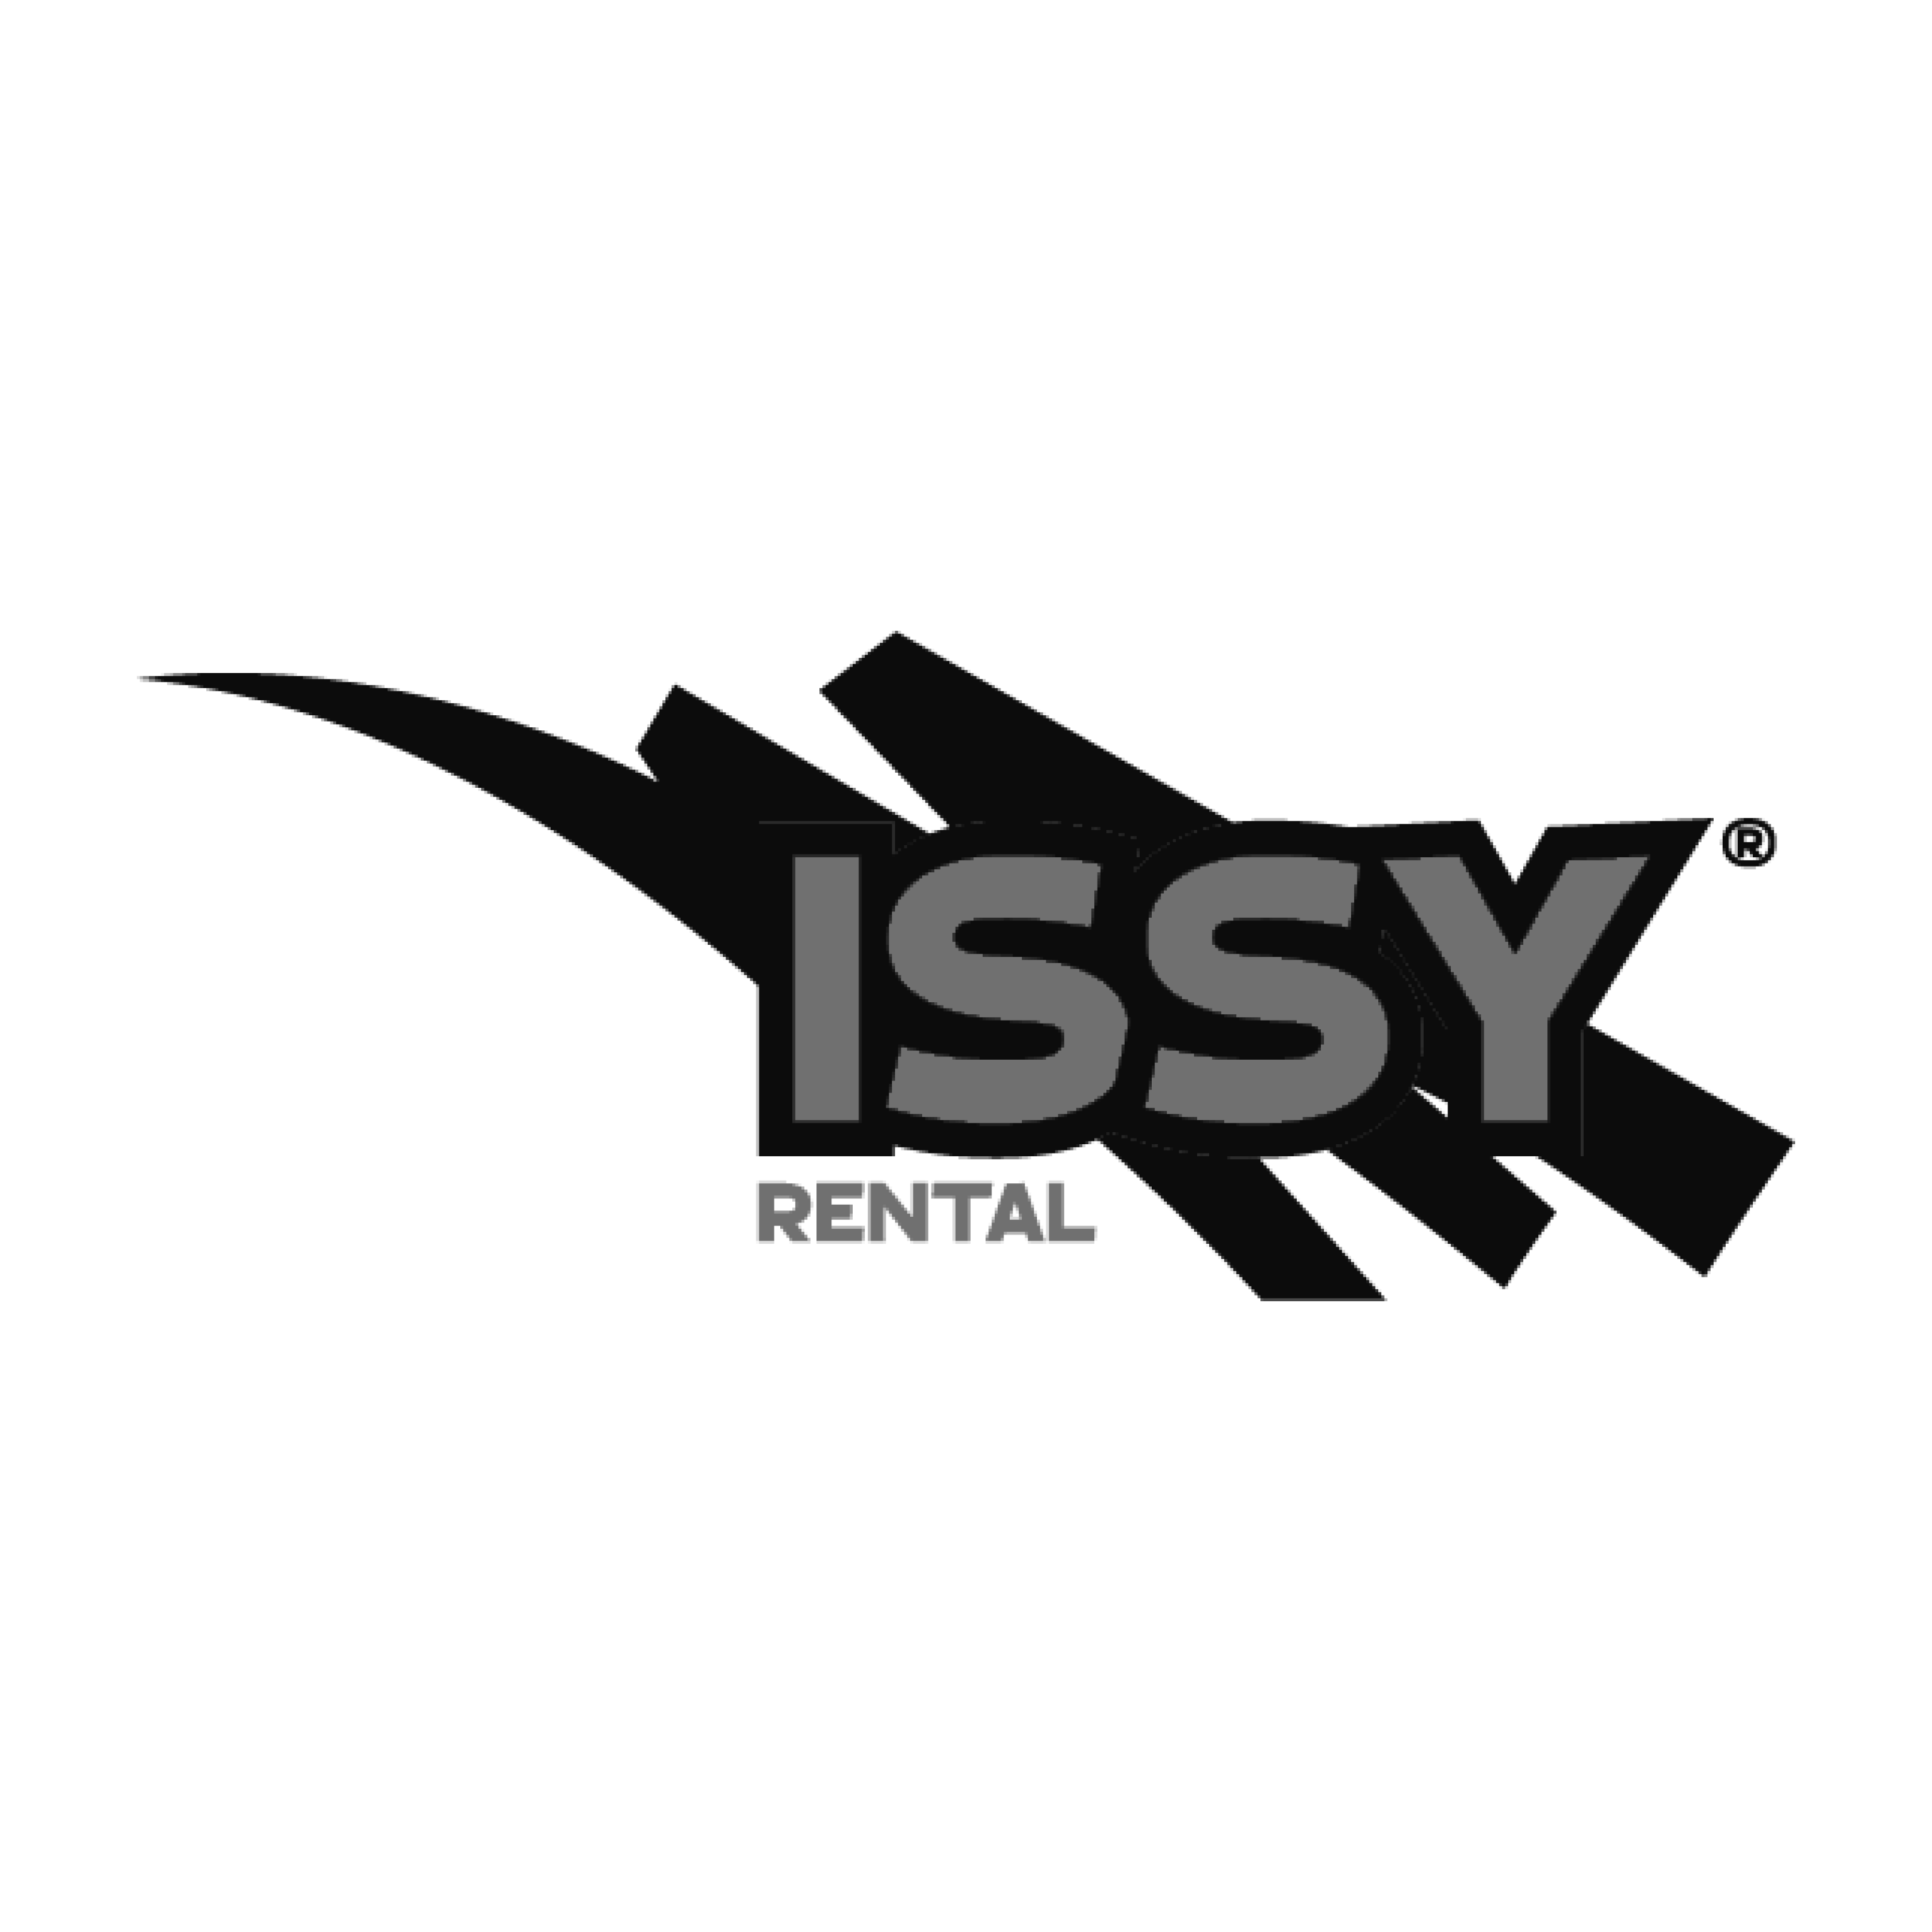 Issy Rental